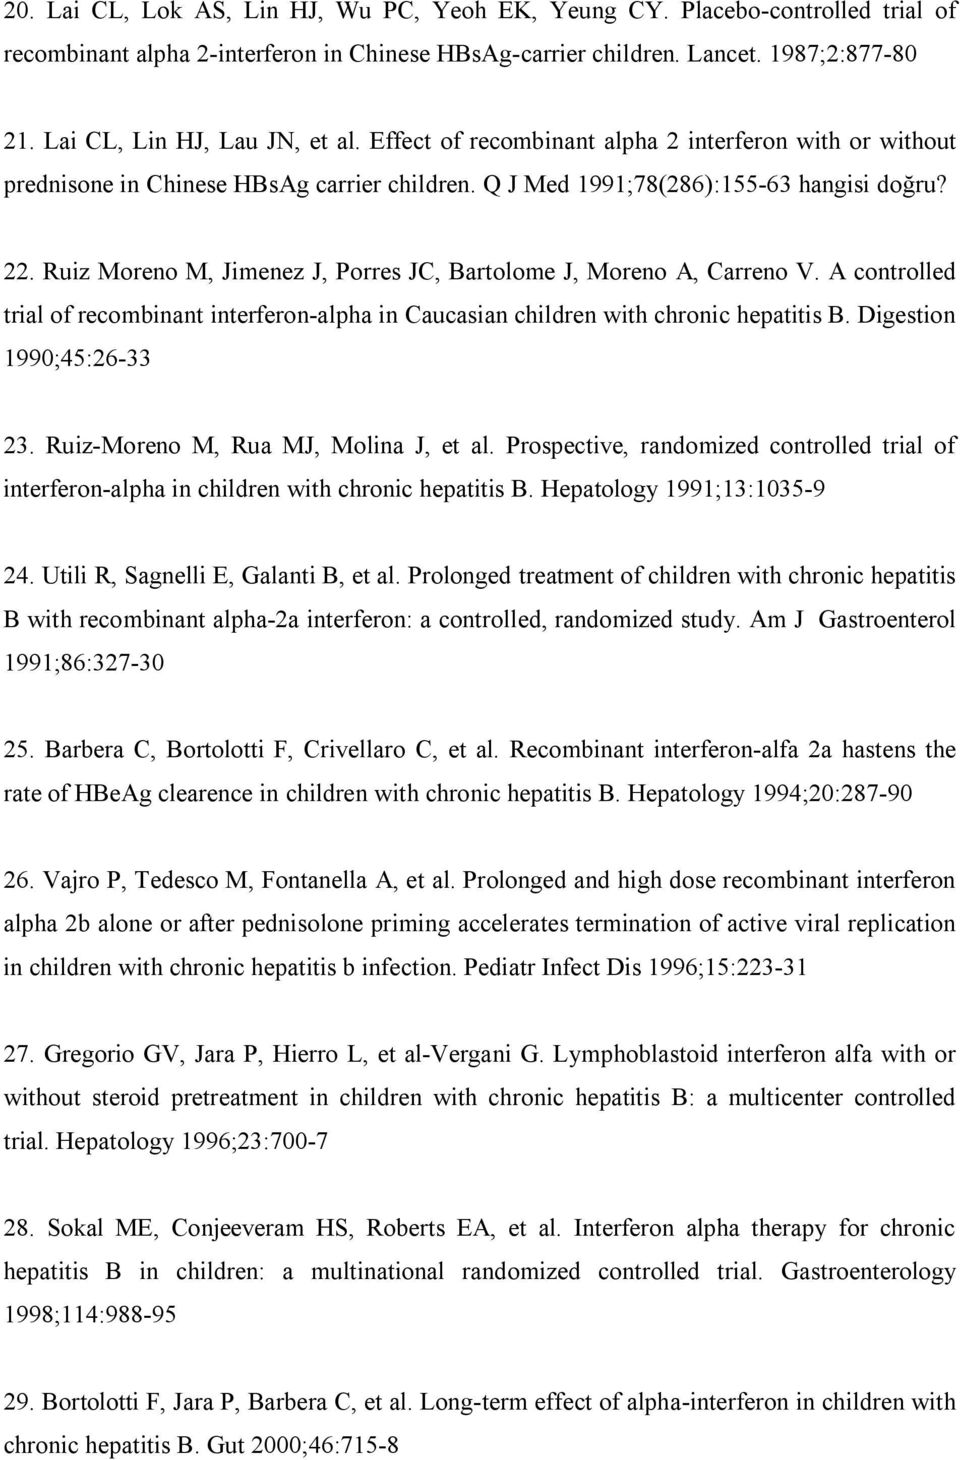 Ruiz Moreno M, Jimenez J, Porres JC, Bartolome J, Moreno A, Carreno V. A controlled trial of recombinant interferon-alpha in Caucasian children with chronic hepatitis B. Digestion 1990;45:26-33 23.